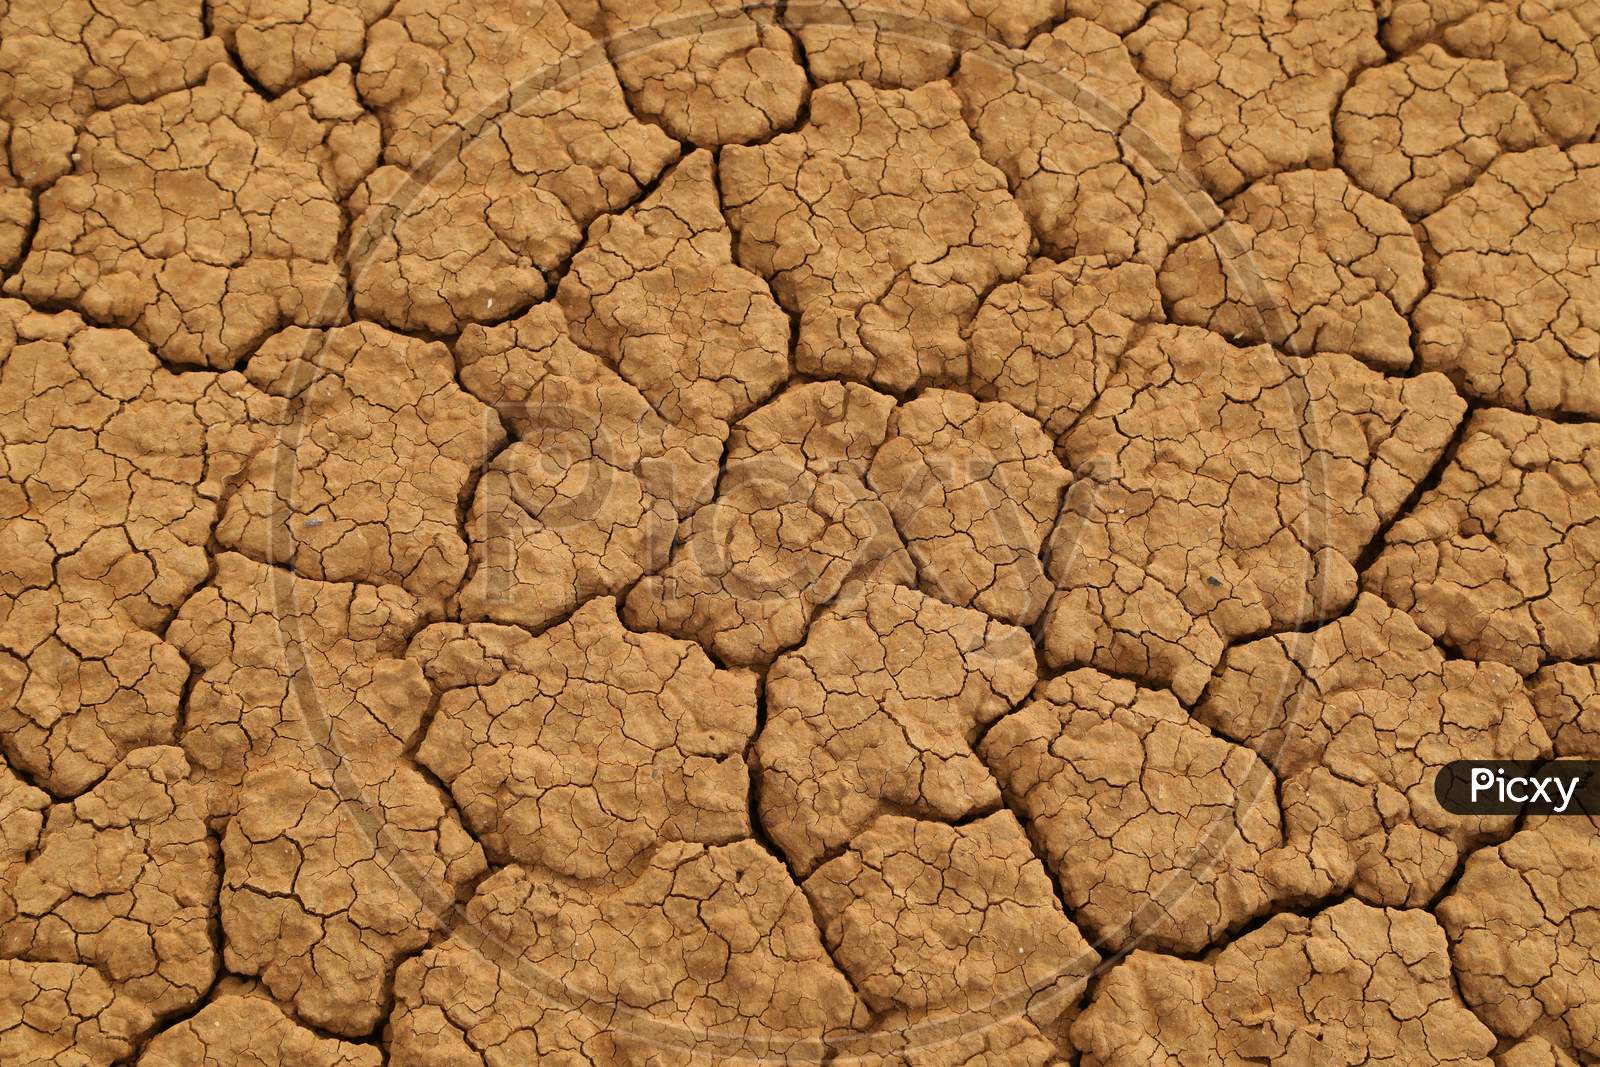 Mud cracks of Dry land of Kenya